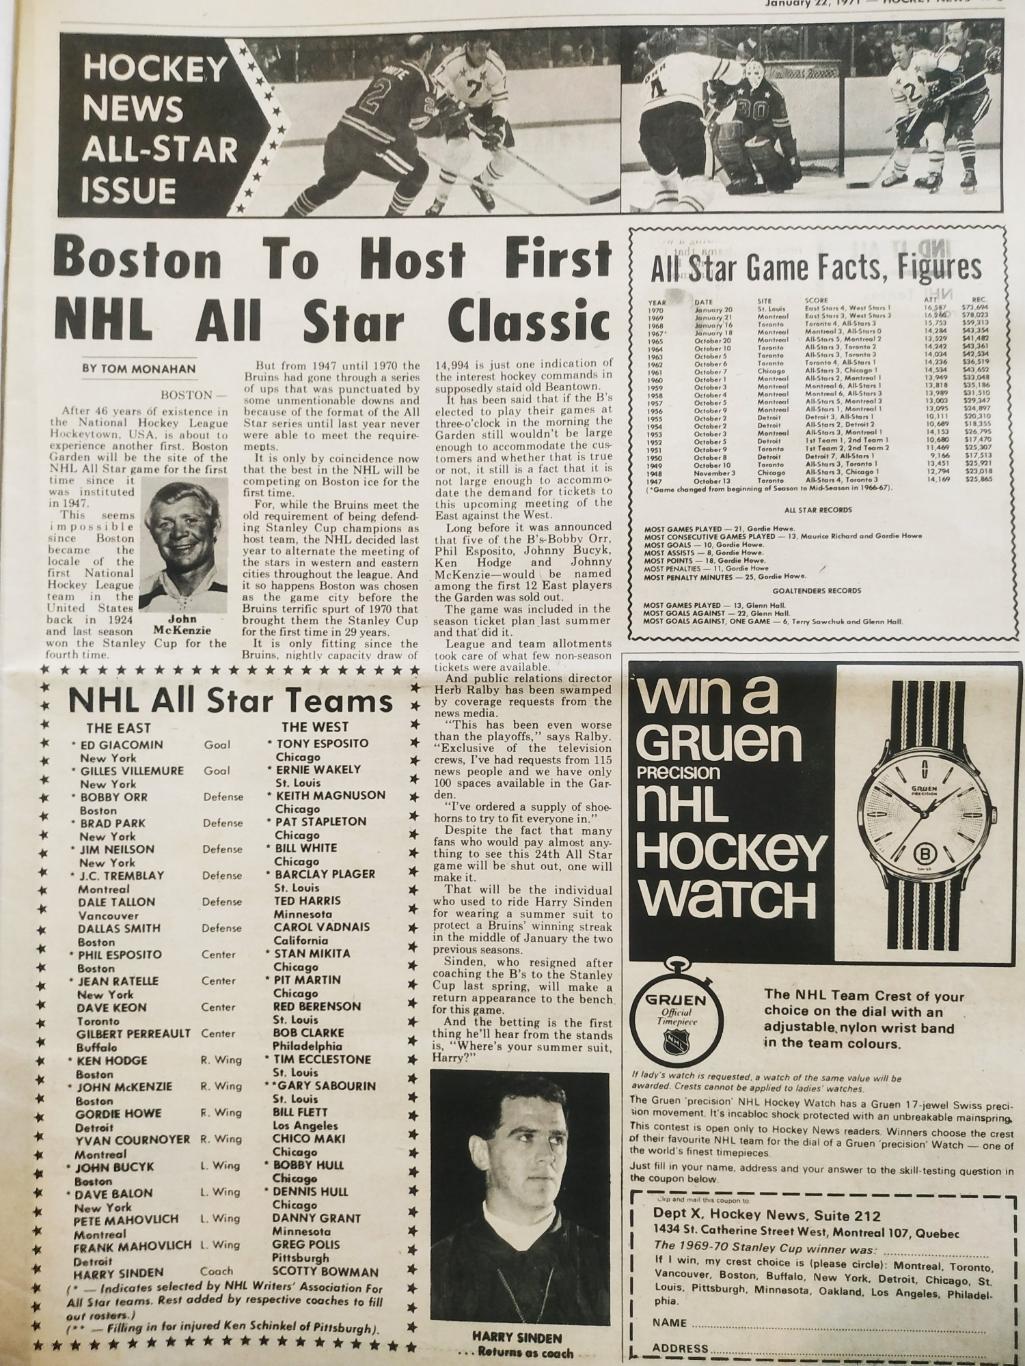 ХОККЕЙ ЖУРНАЛ ЕЖЕНЕДЕЛЬНИК НХЛ НОВОСТИ ХОККЕЯ JAN.22 1971 NHL THE HOCKEY NEWS 2